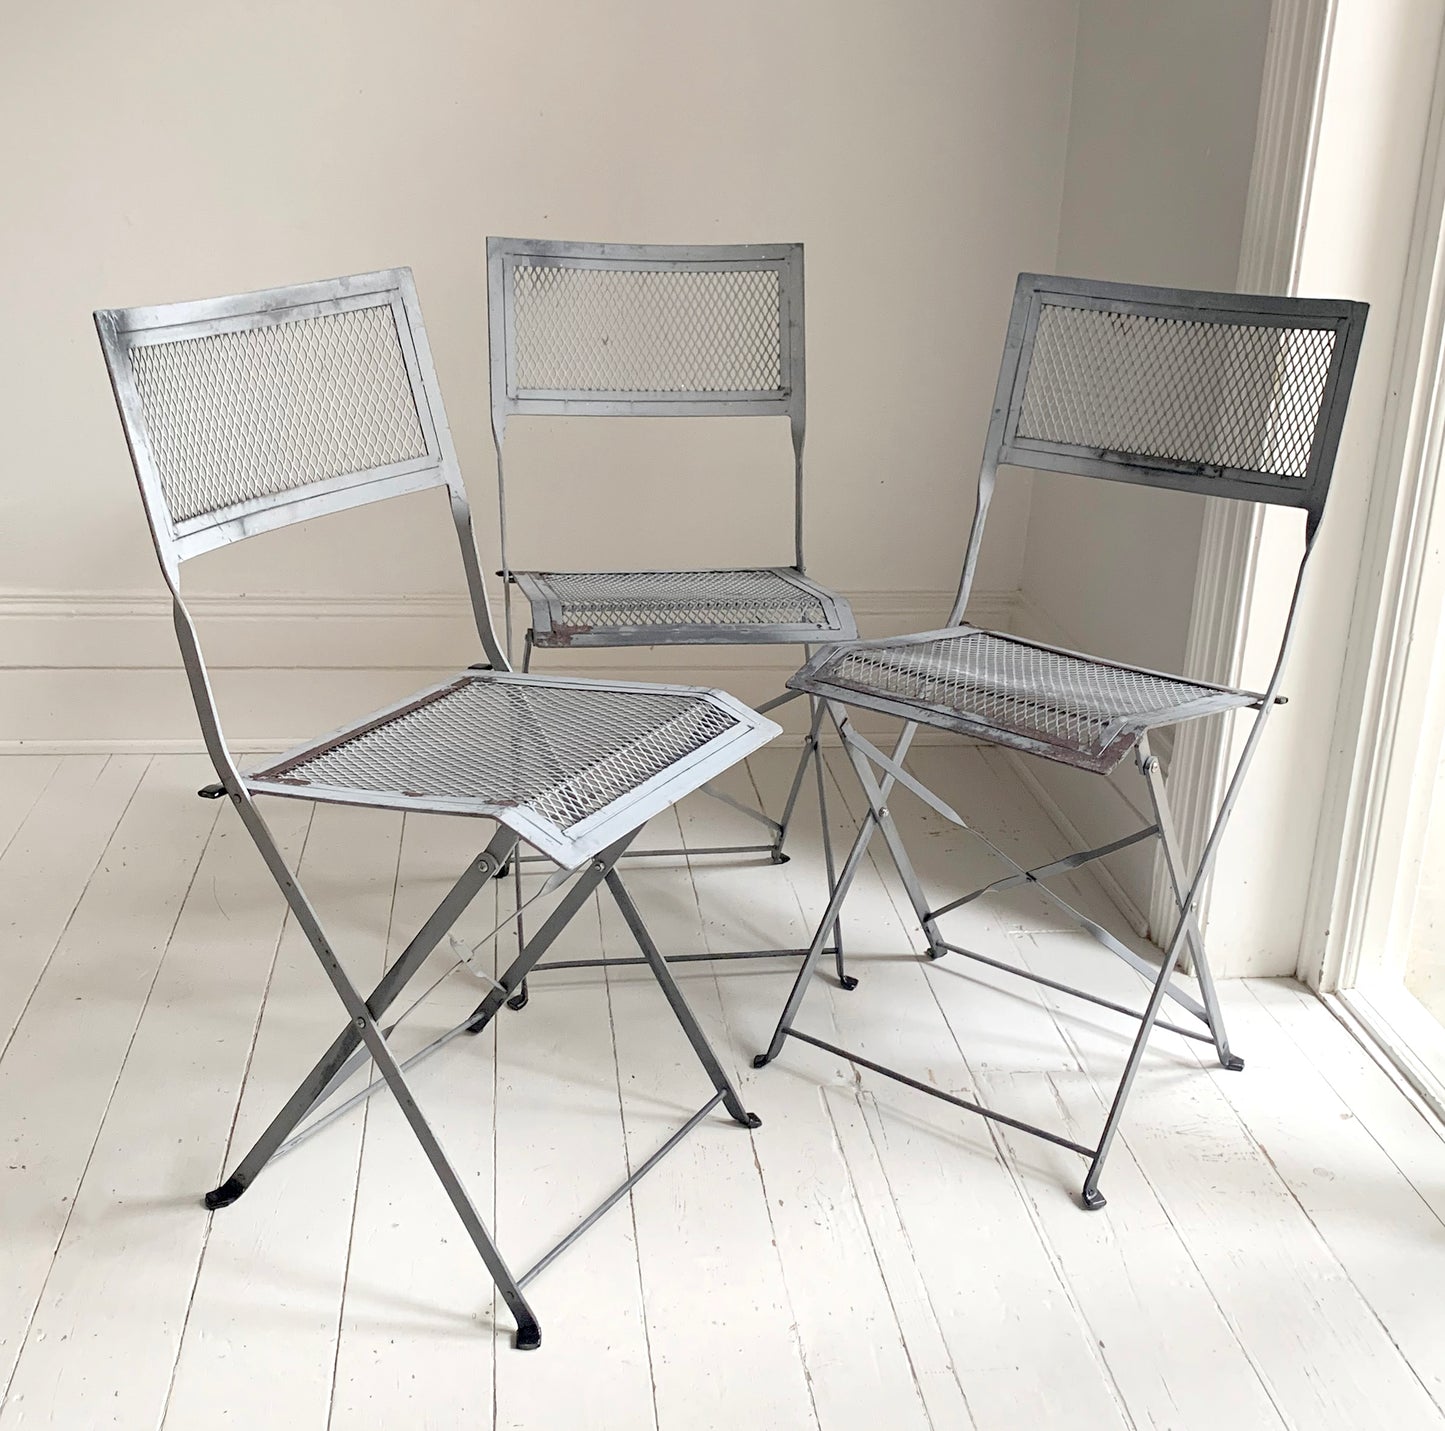 Set of Three Vintage Metal Folding Chairs Indoor / Outdoor - Grey - Great Patina